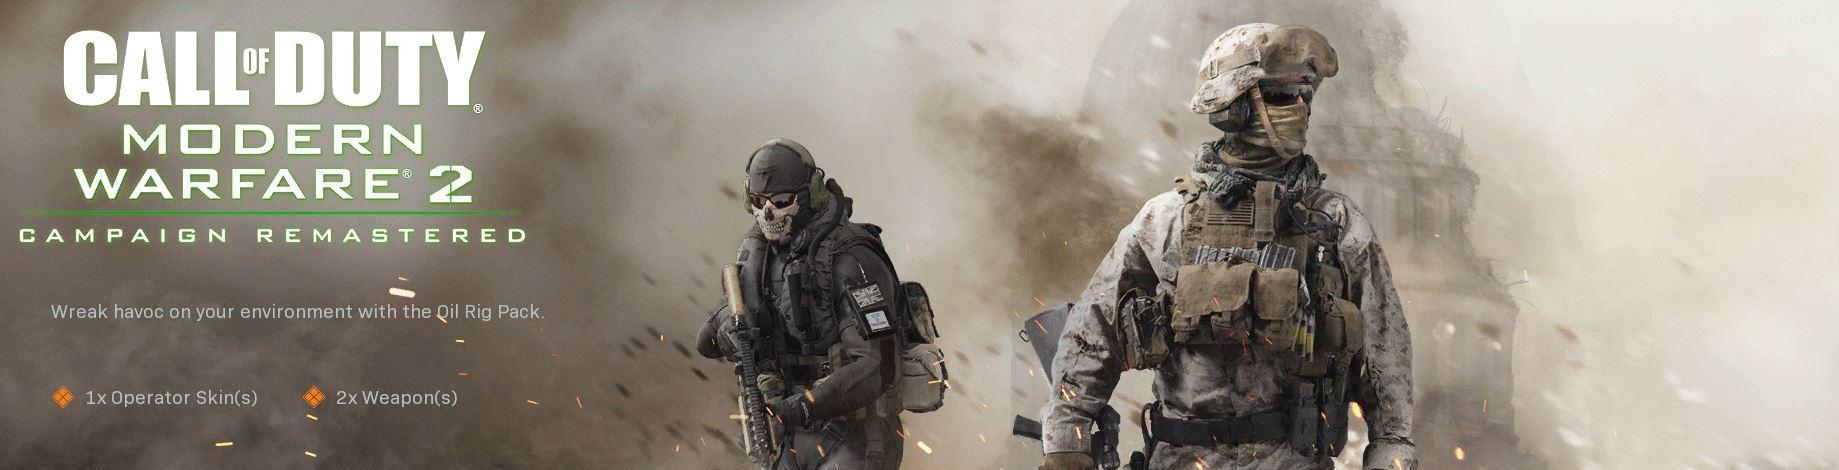 Call of Duty Modern Warfare 2 Campaign Remastered - Operators